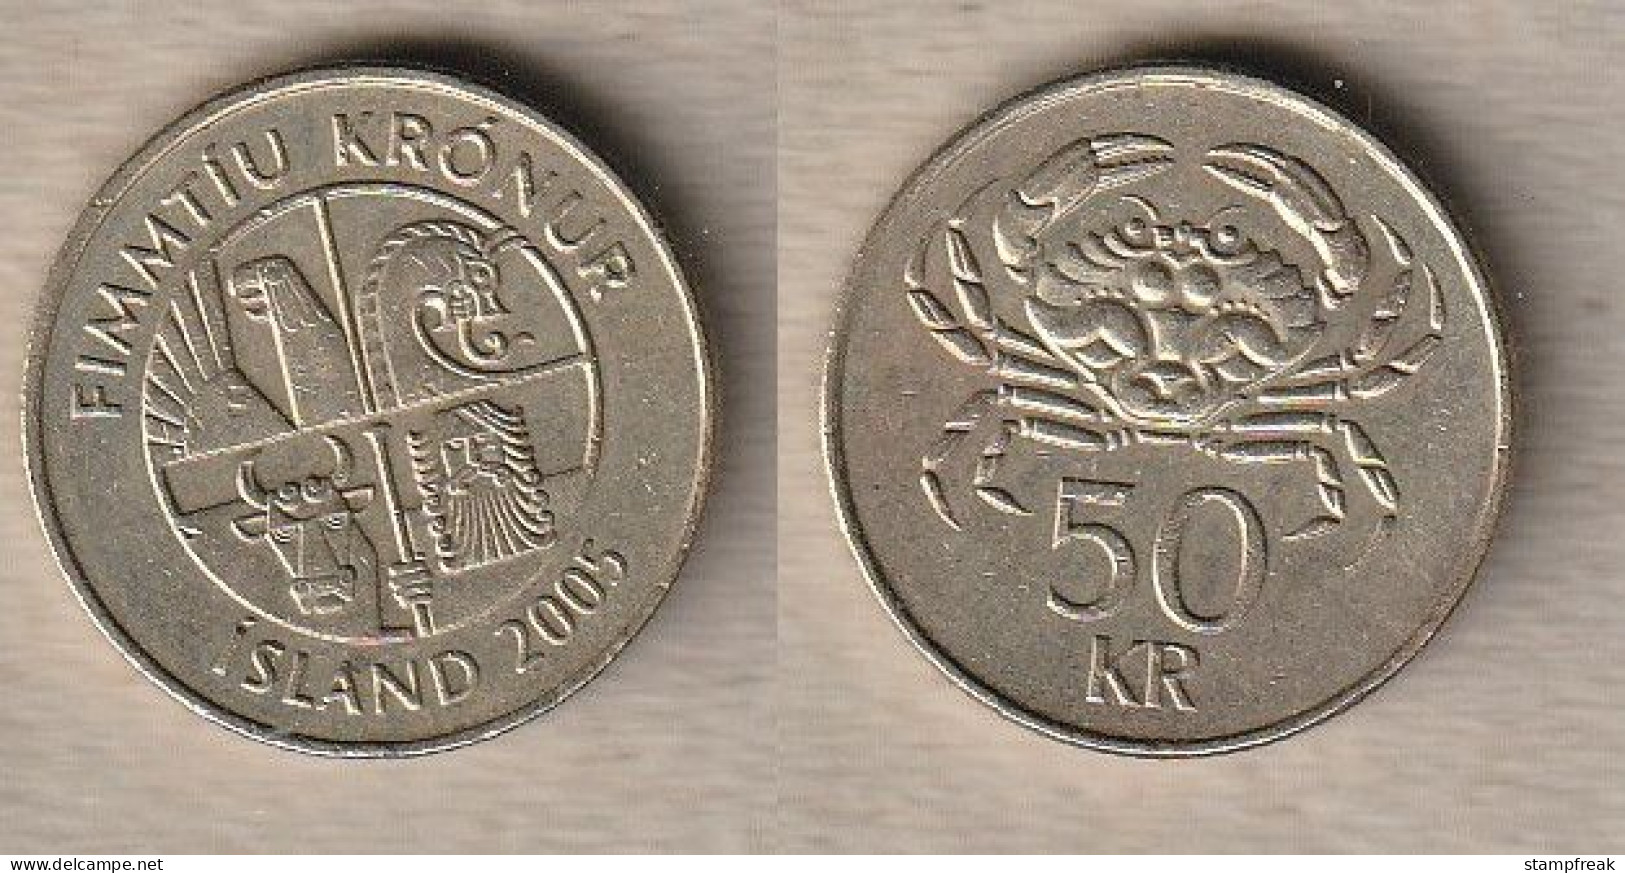 02458) Island, 50 Kronen 2005 - Islandia